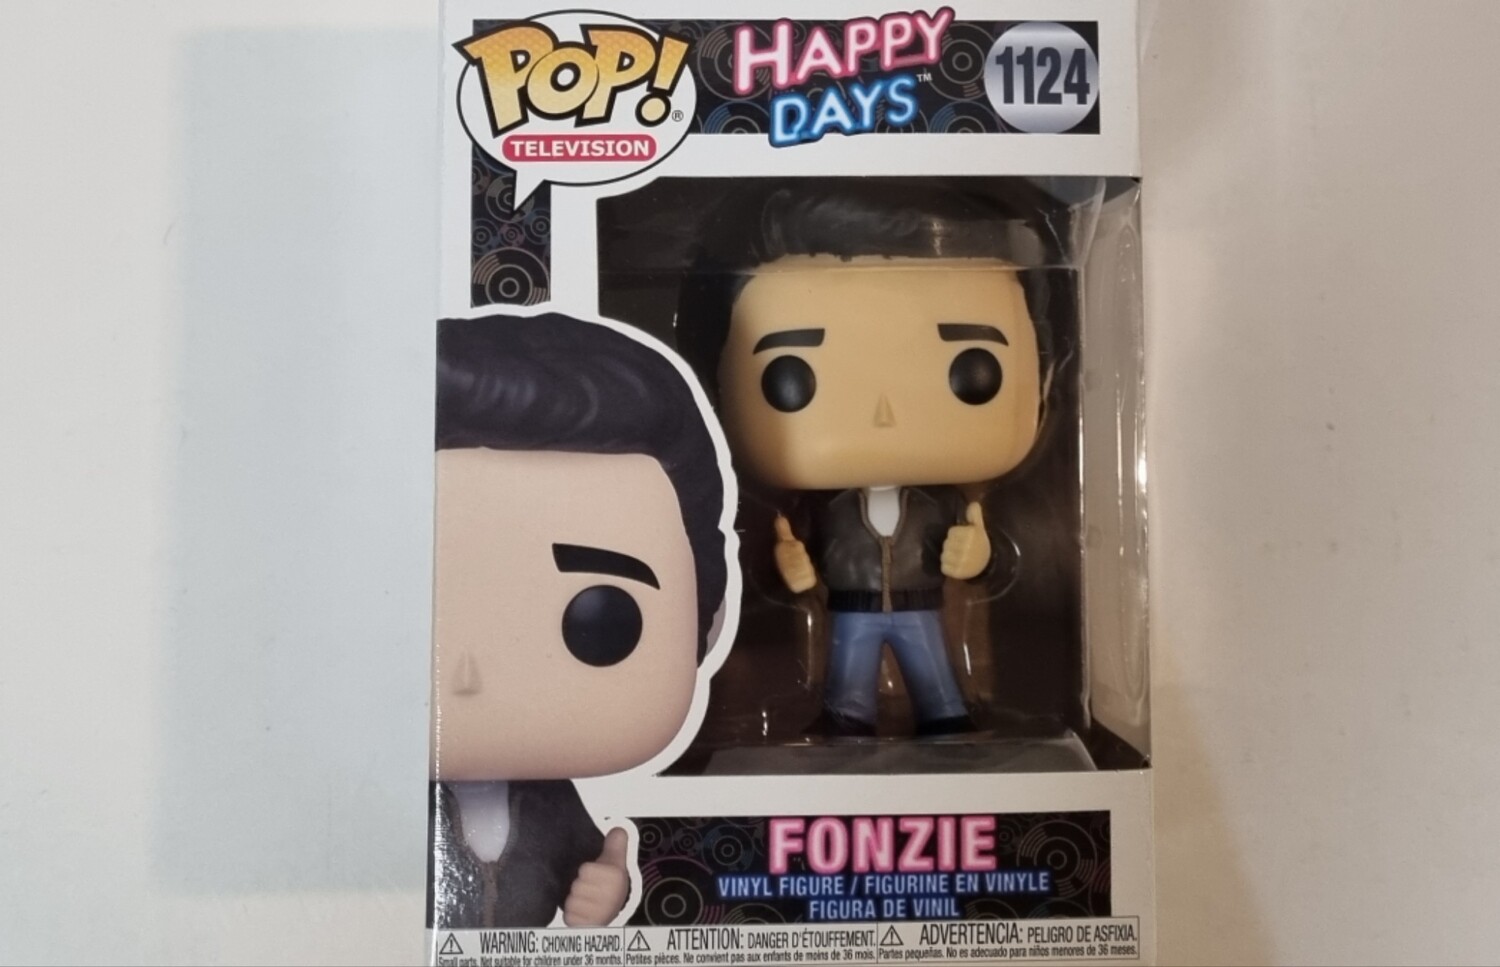 Funko Pop!, Fonzie, #1124, Television, Happy Days